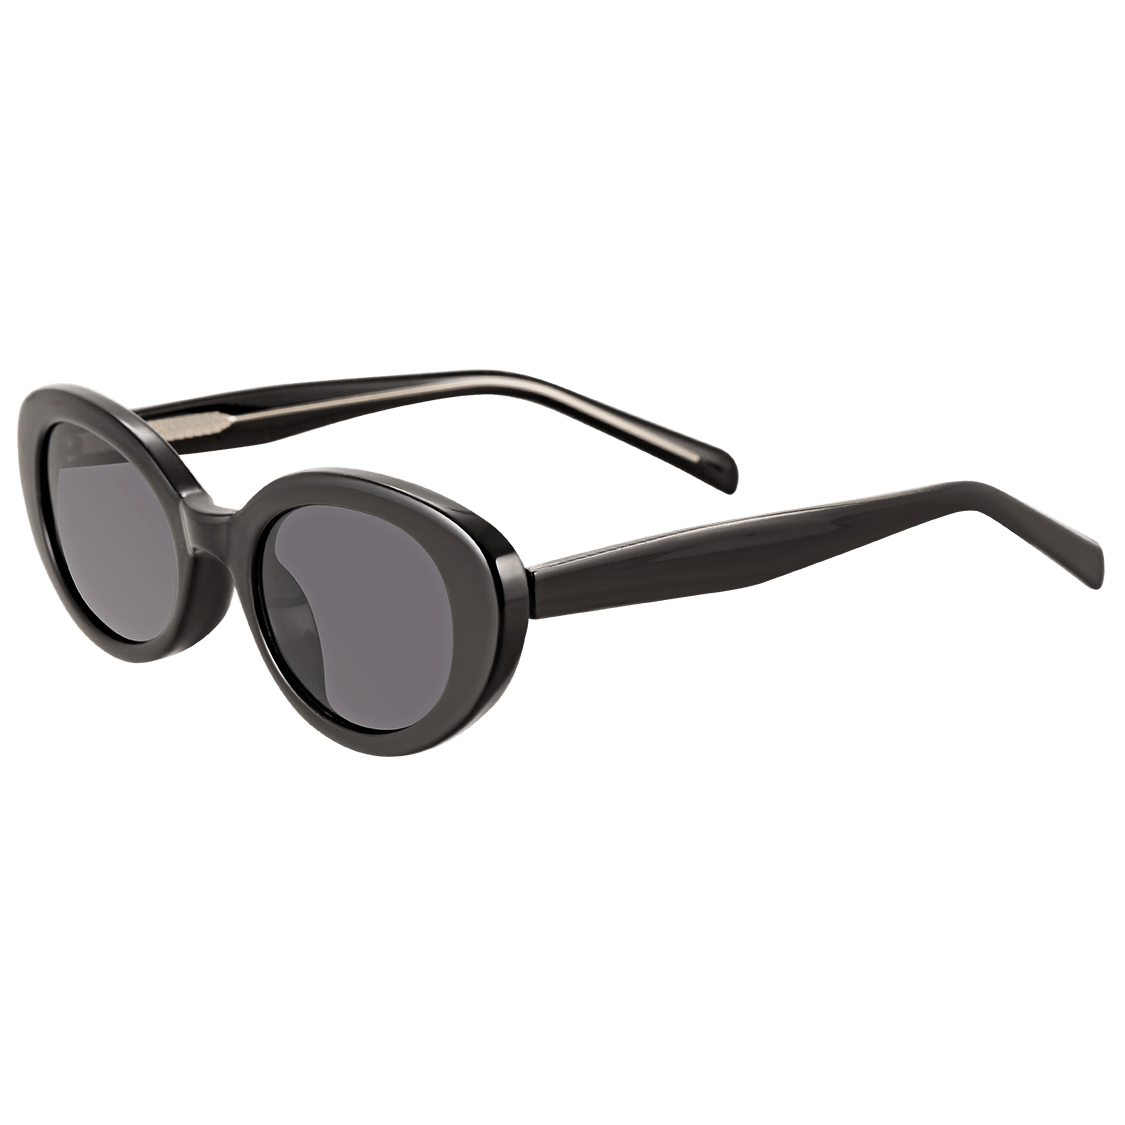 Classic black almond eye shaped sunglasses